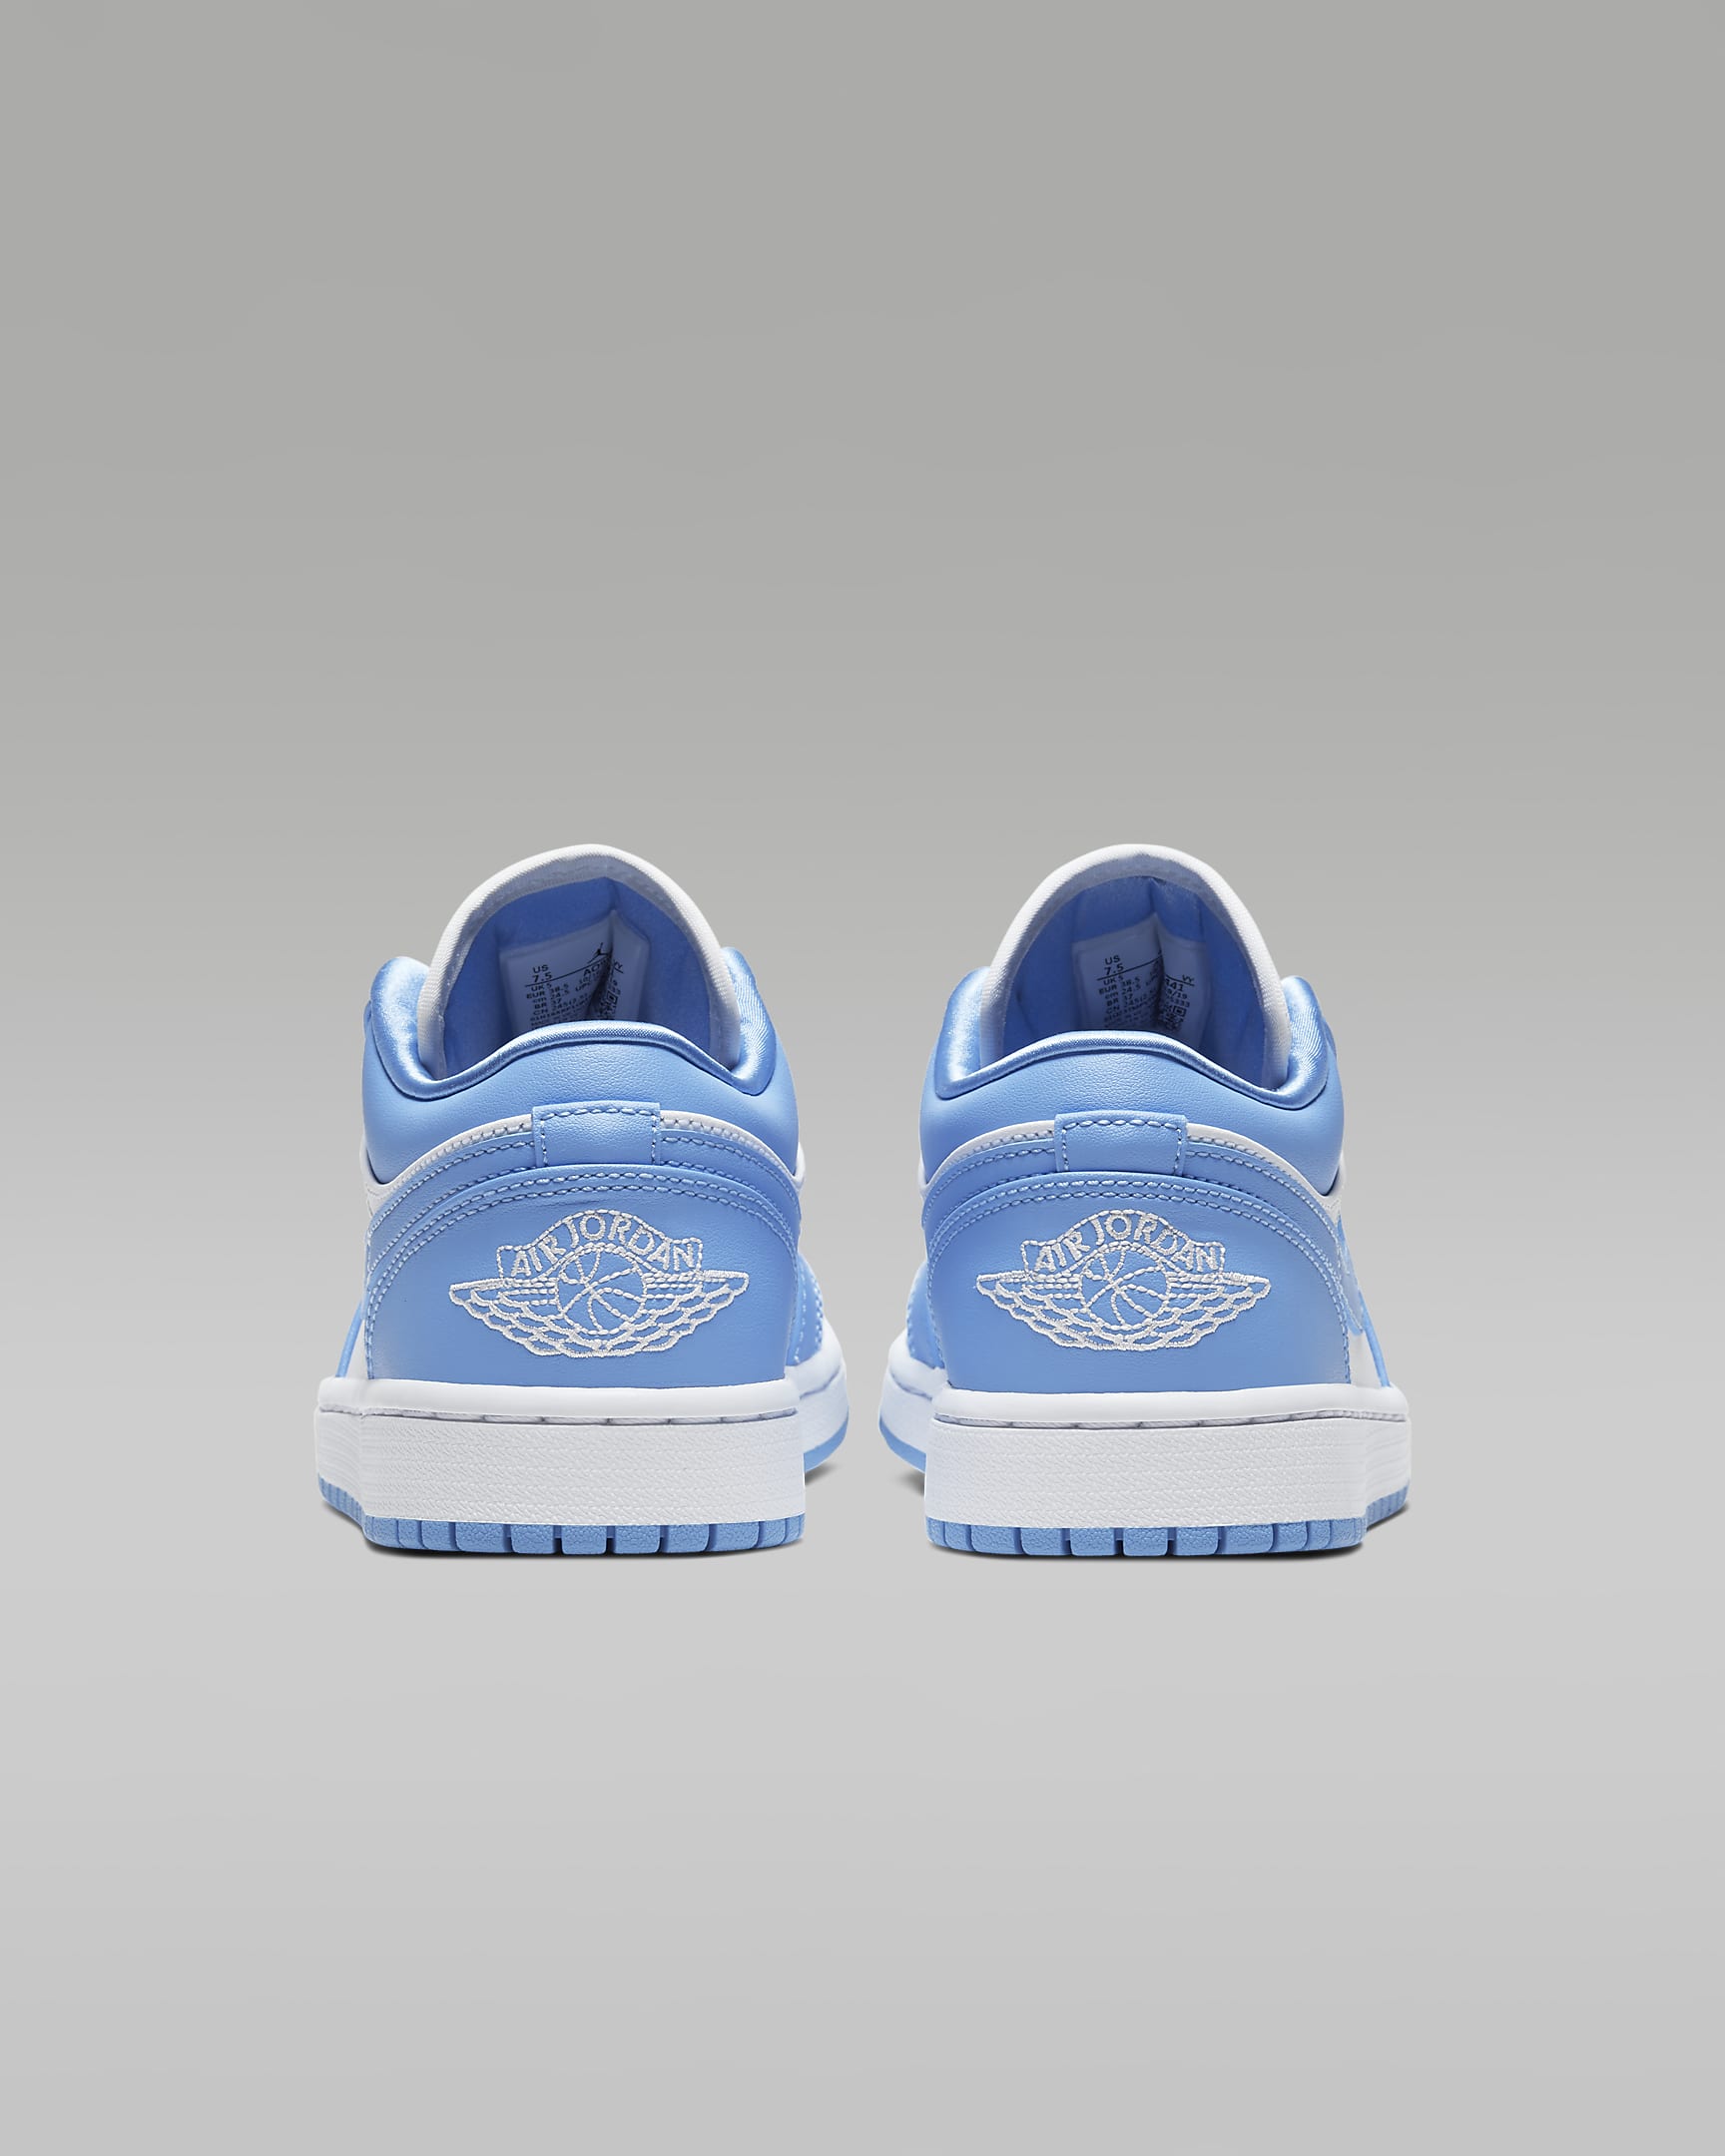 Air Jordan 1 Low Women's Shoes - University Blue/White/University Blue